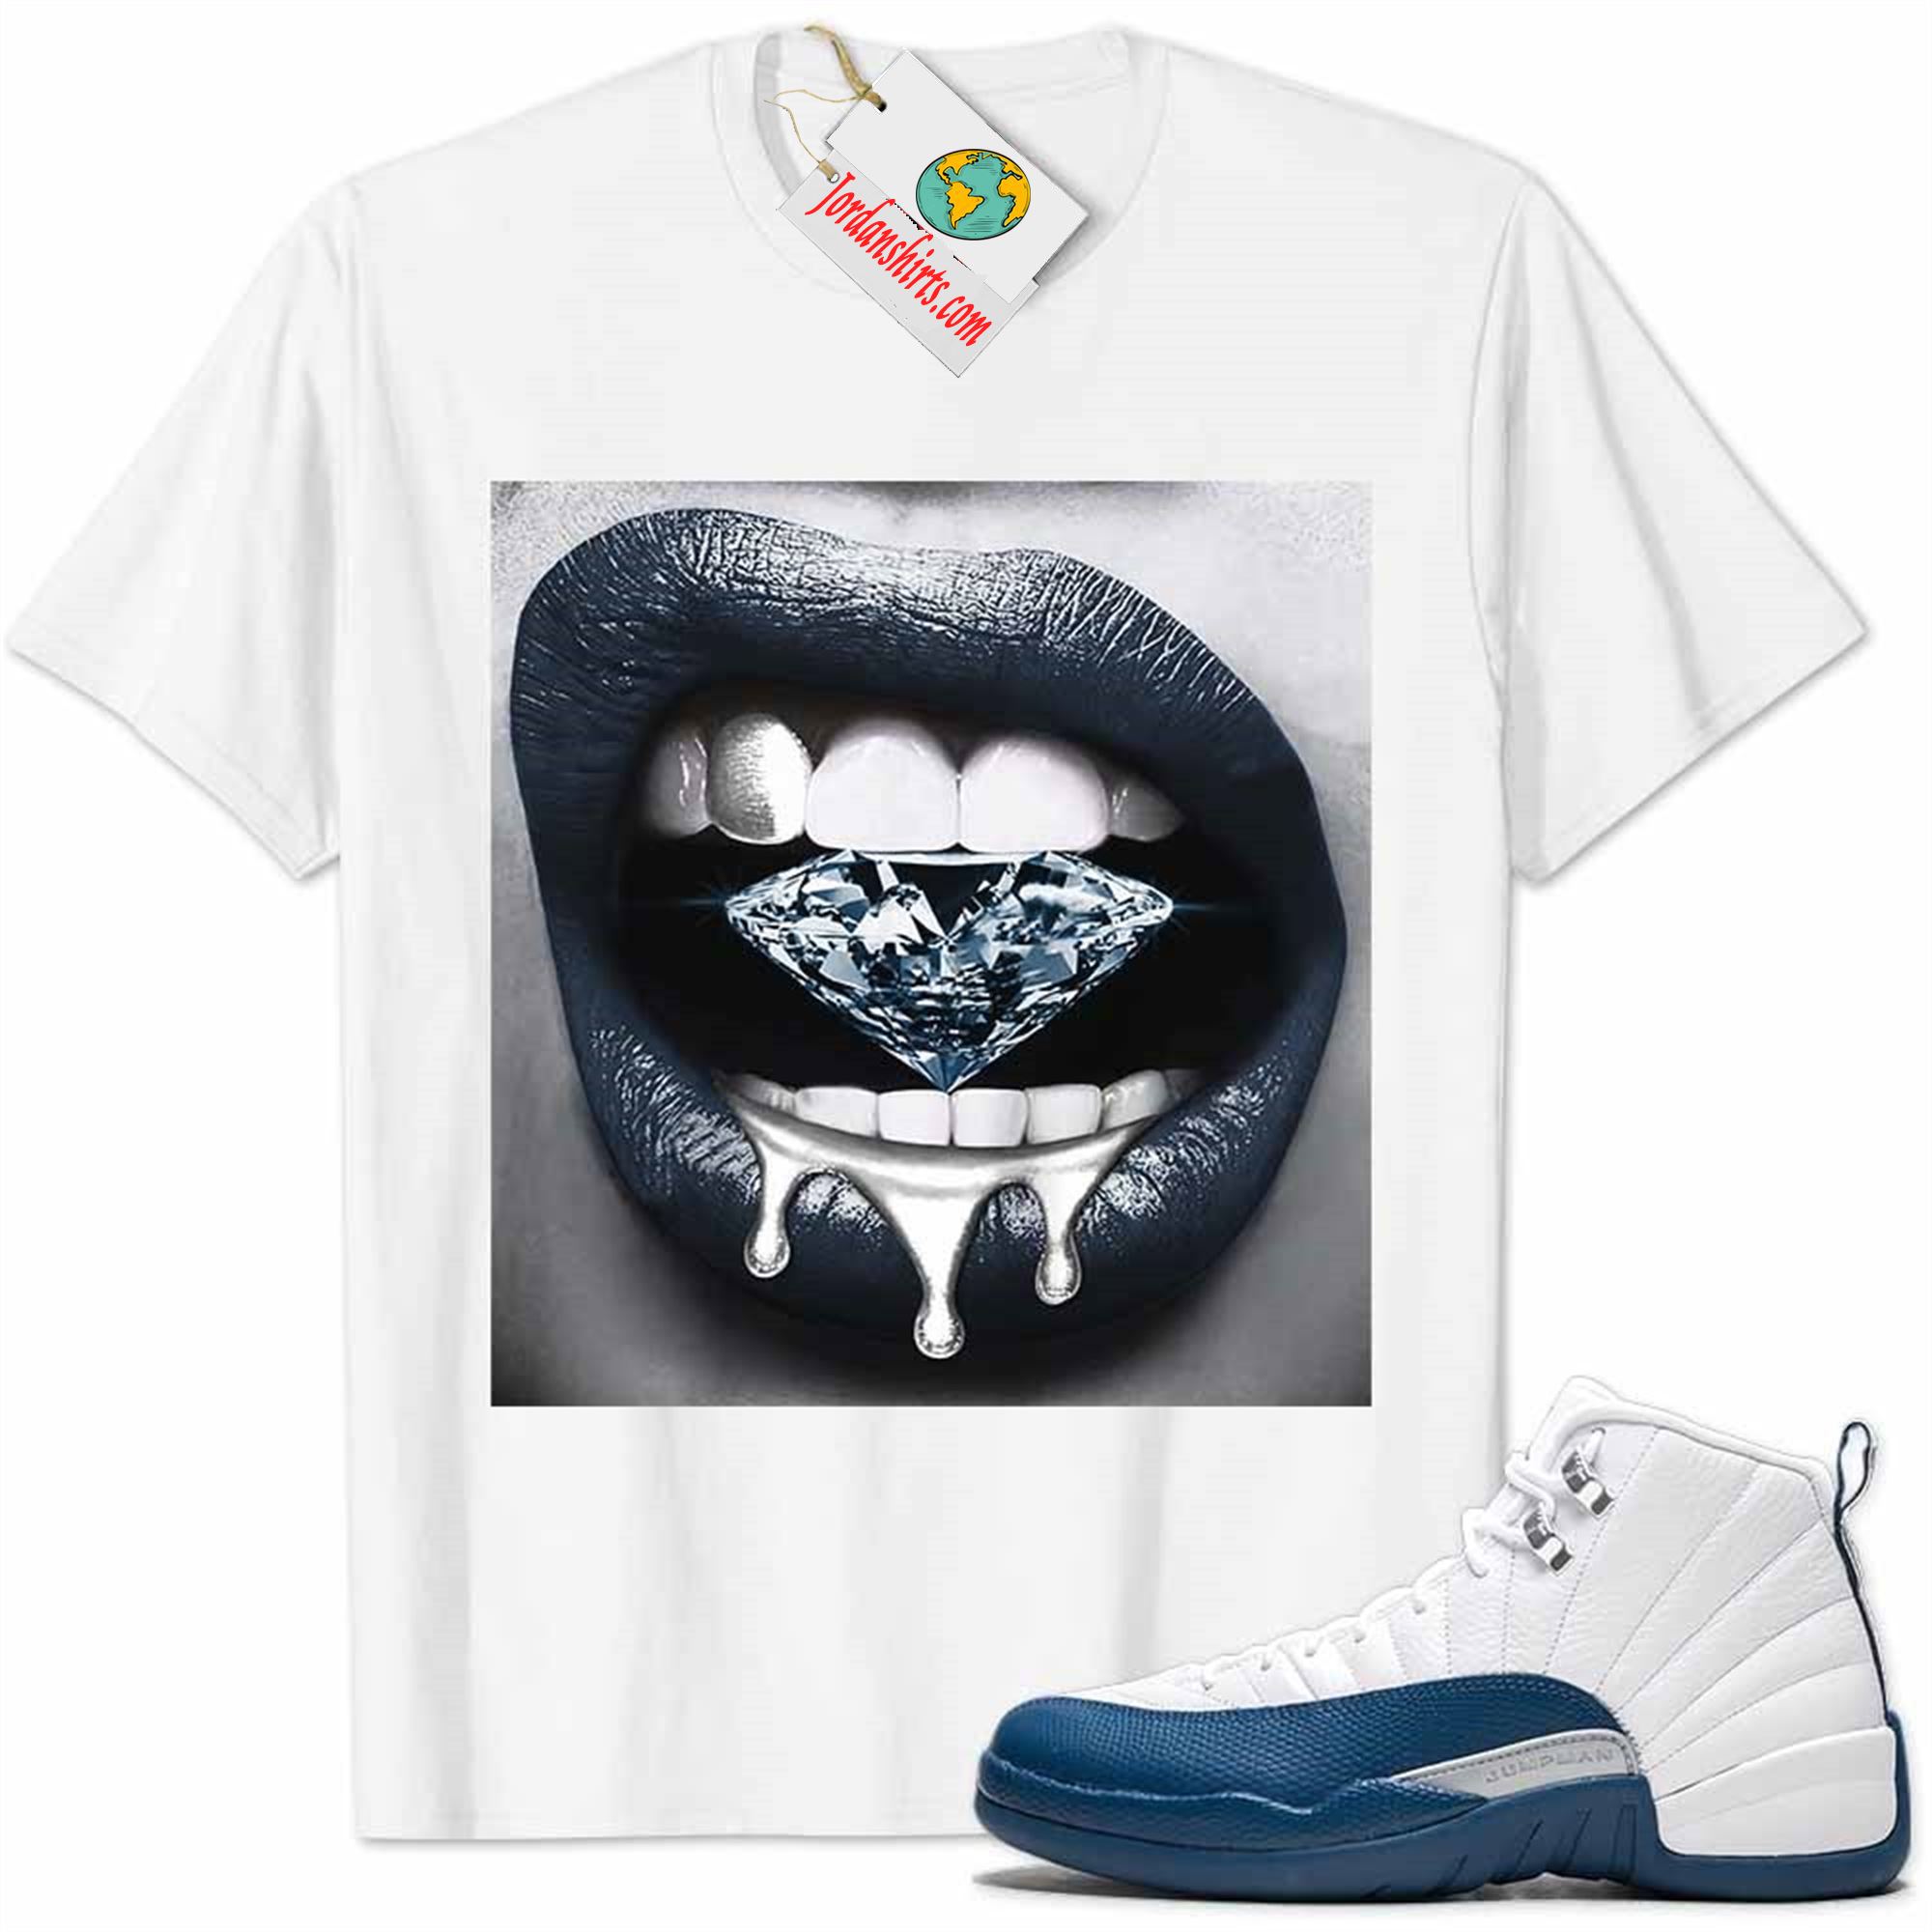 Jordan 12 Shirt, Jordan 12 French Blue Shirt Sexy Lip Bite Diamond Dripping White Full Size Up To 5xl